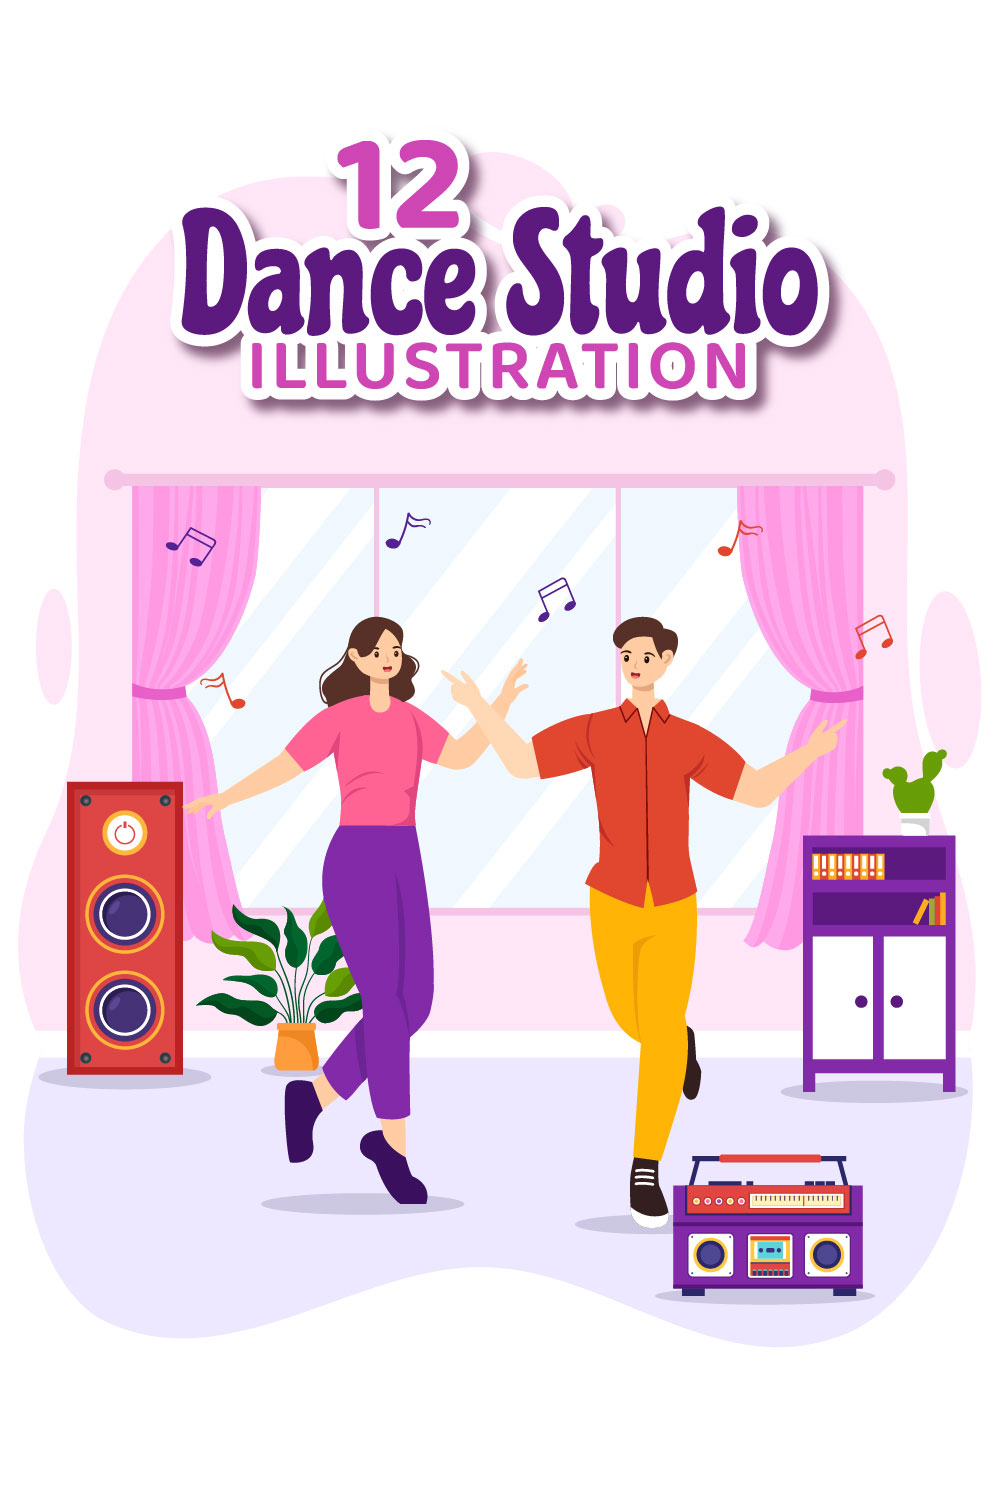 12 Dance Studio Illustration pinterest preview image.